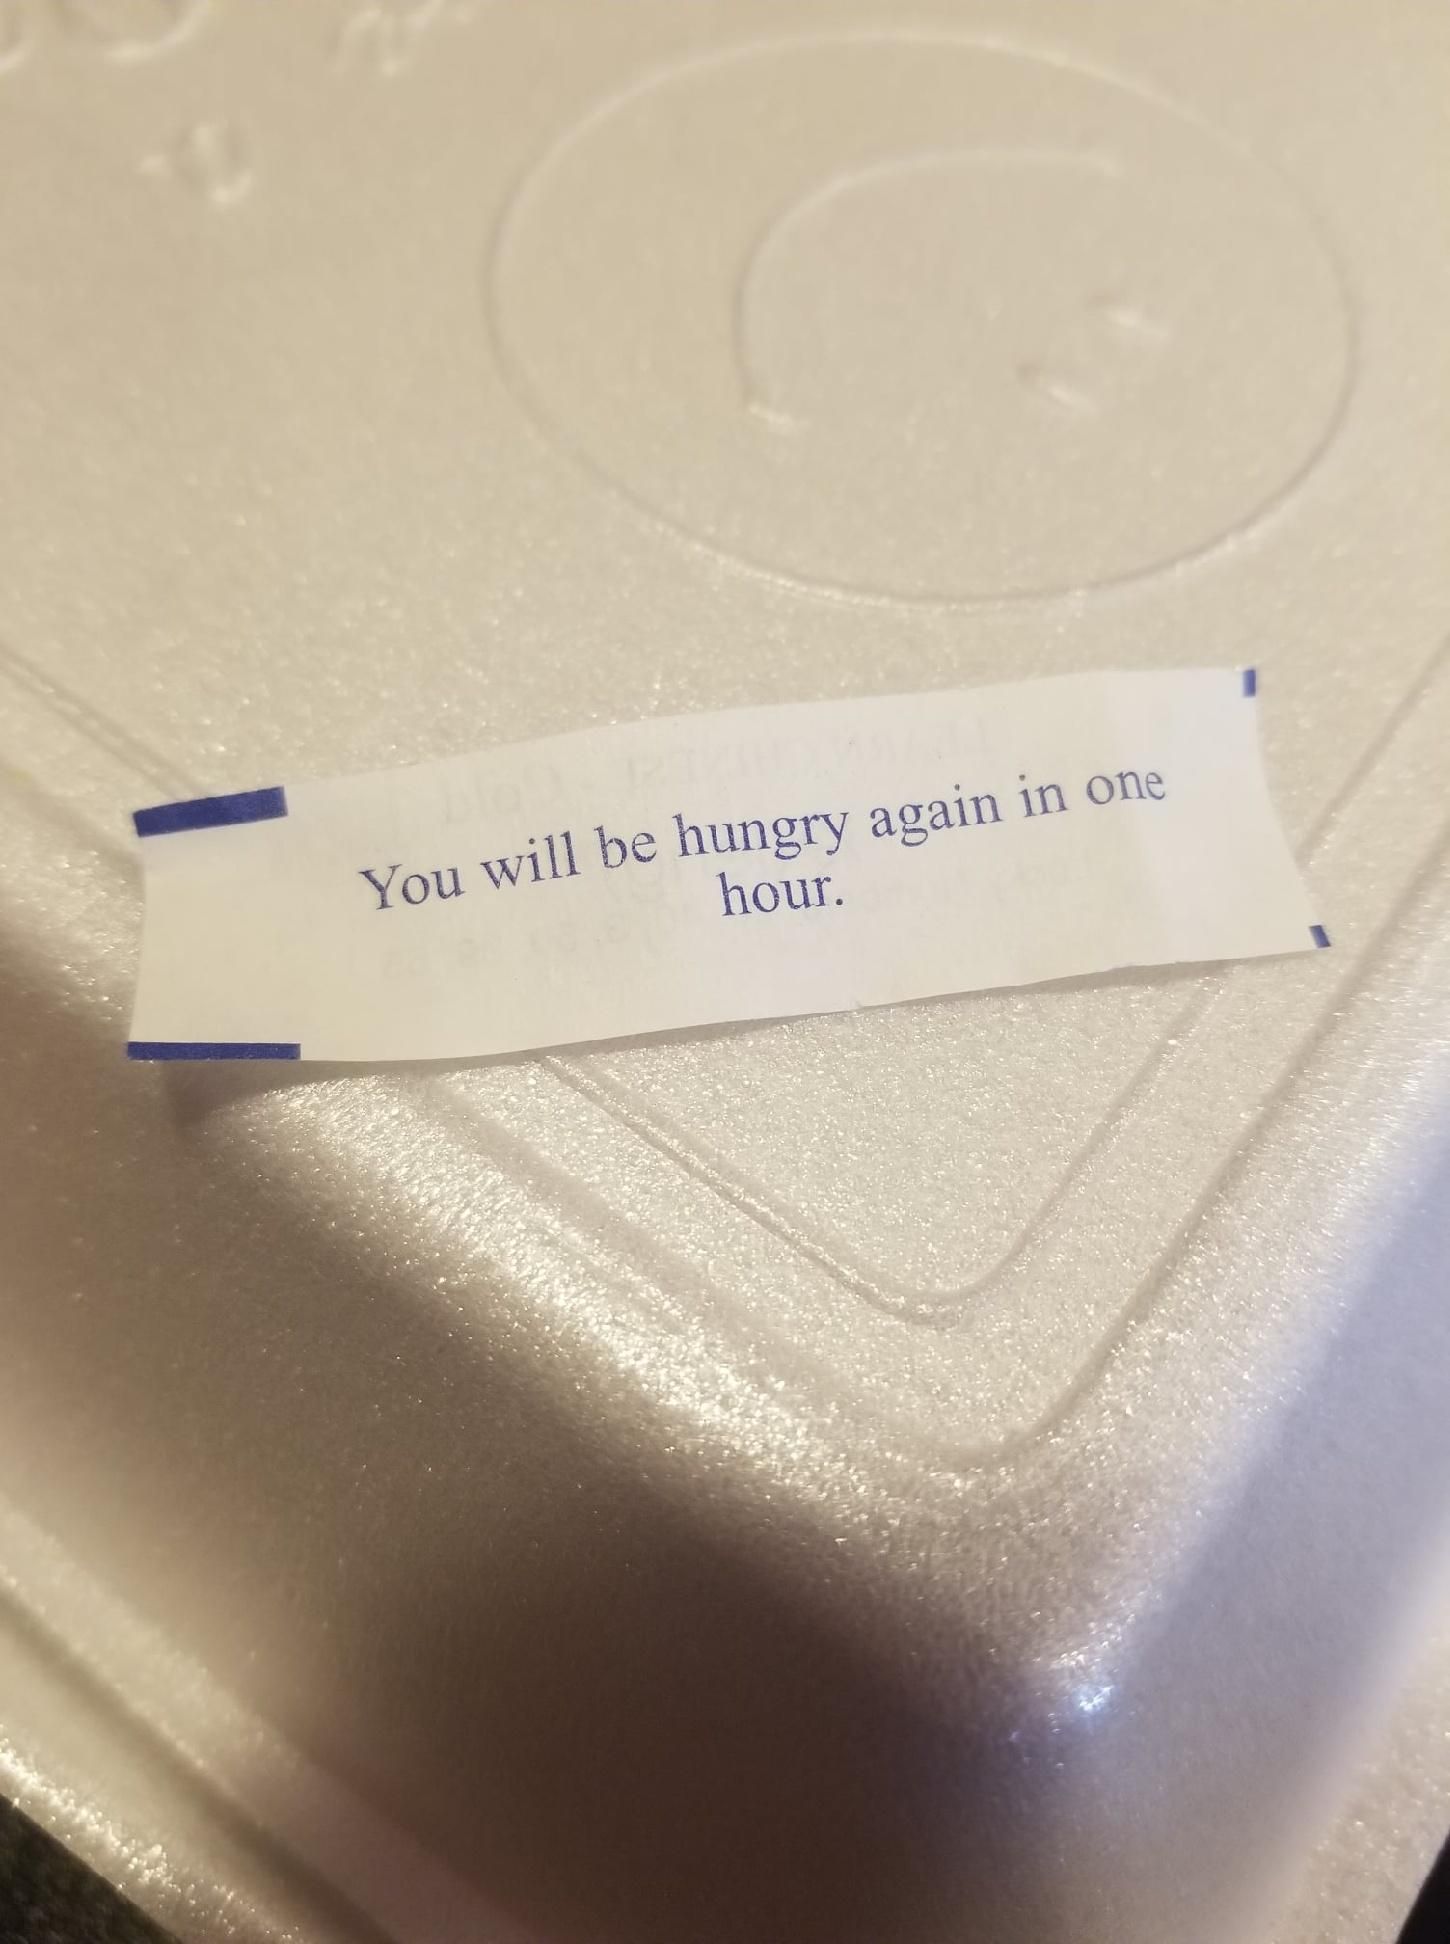 My friend's fortune.